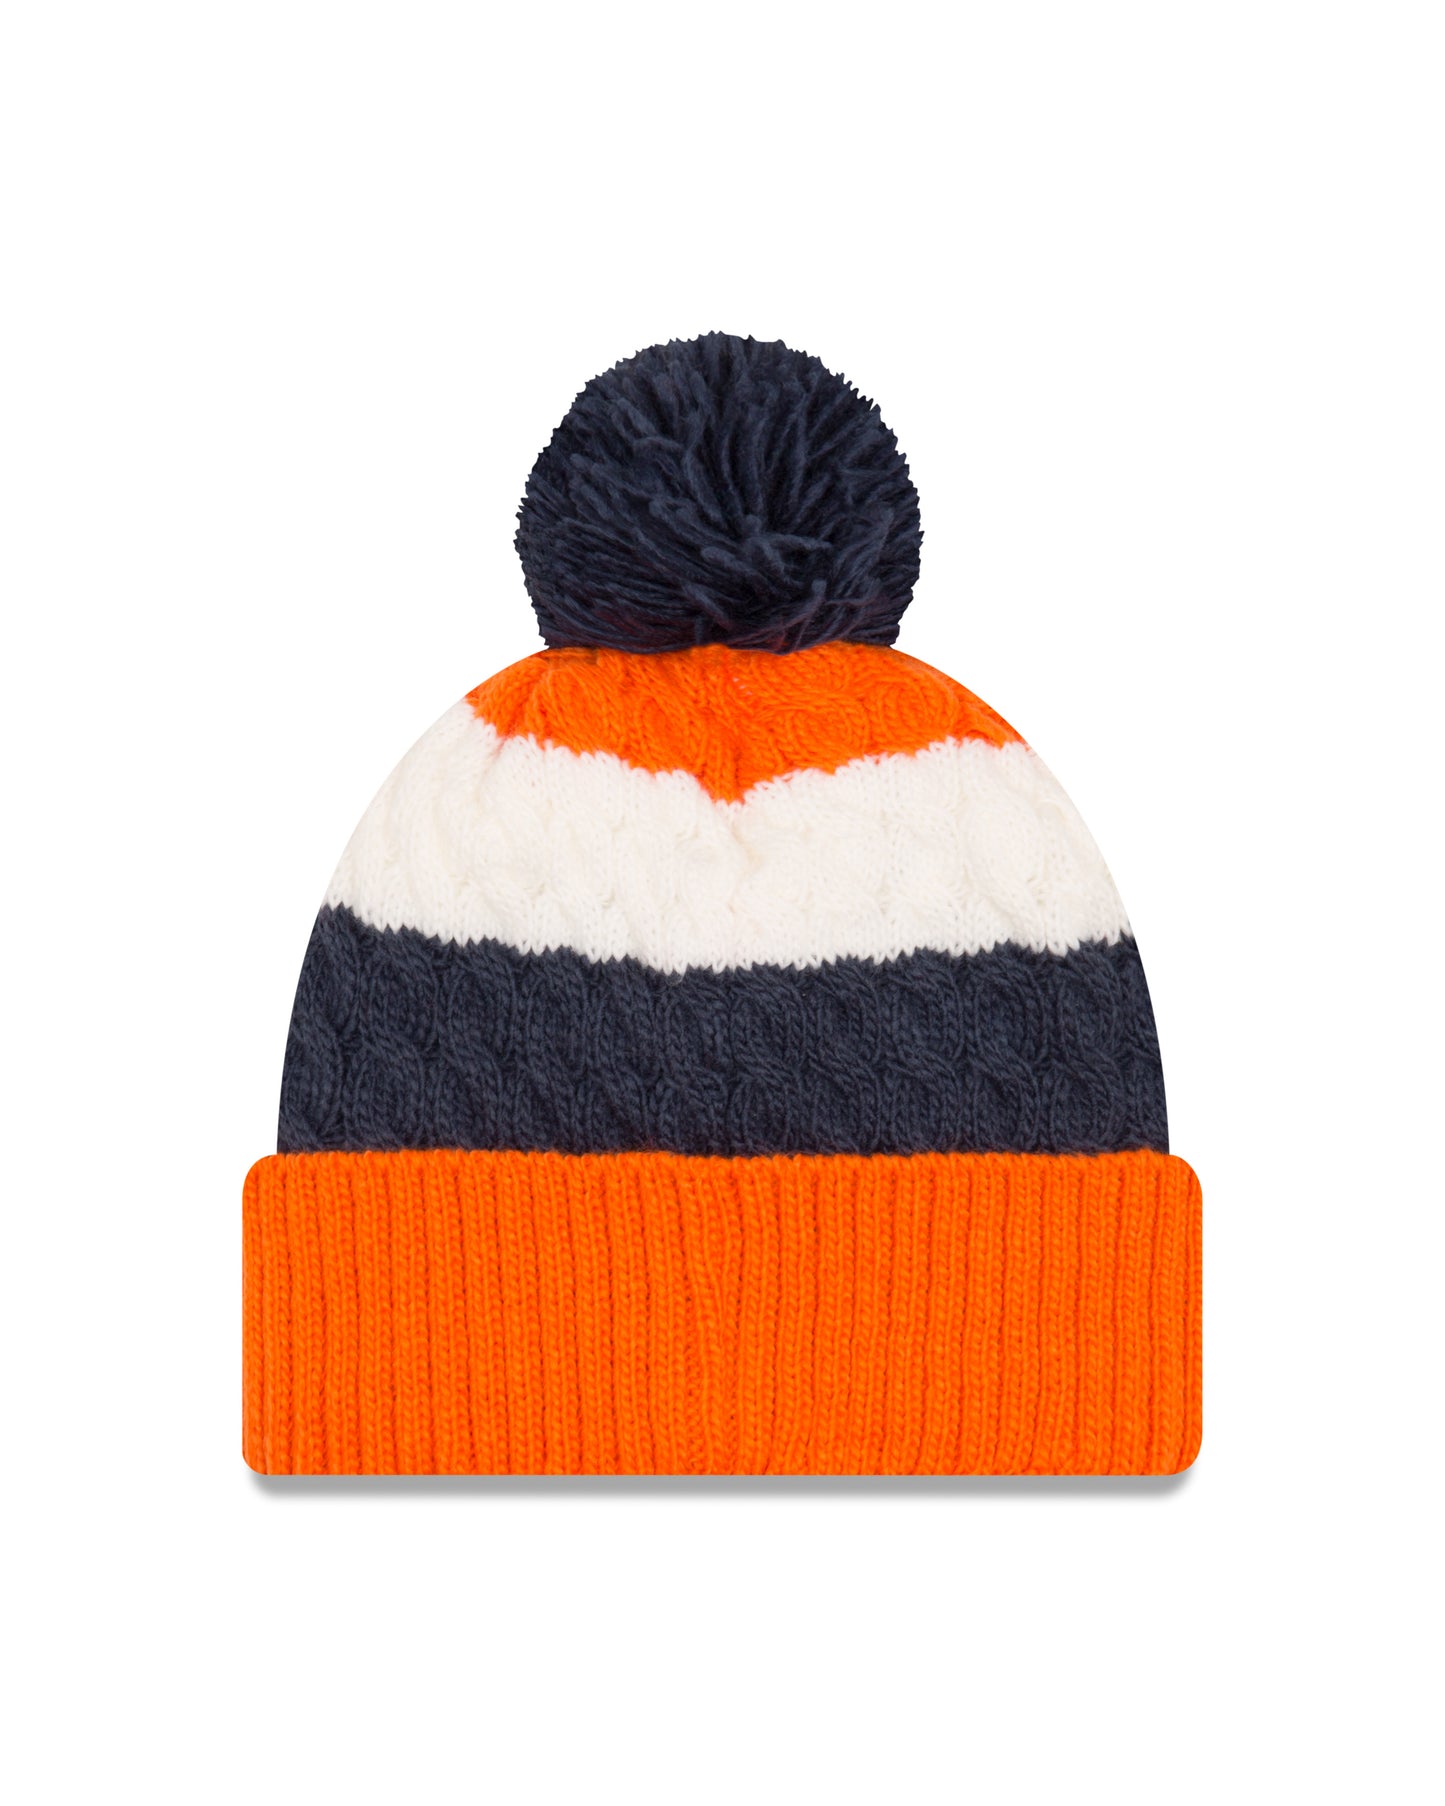 Denver Broncos New Era Women's Layered Chiller Knit Hat